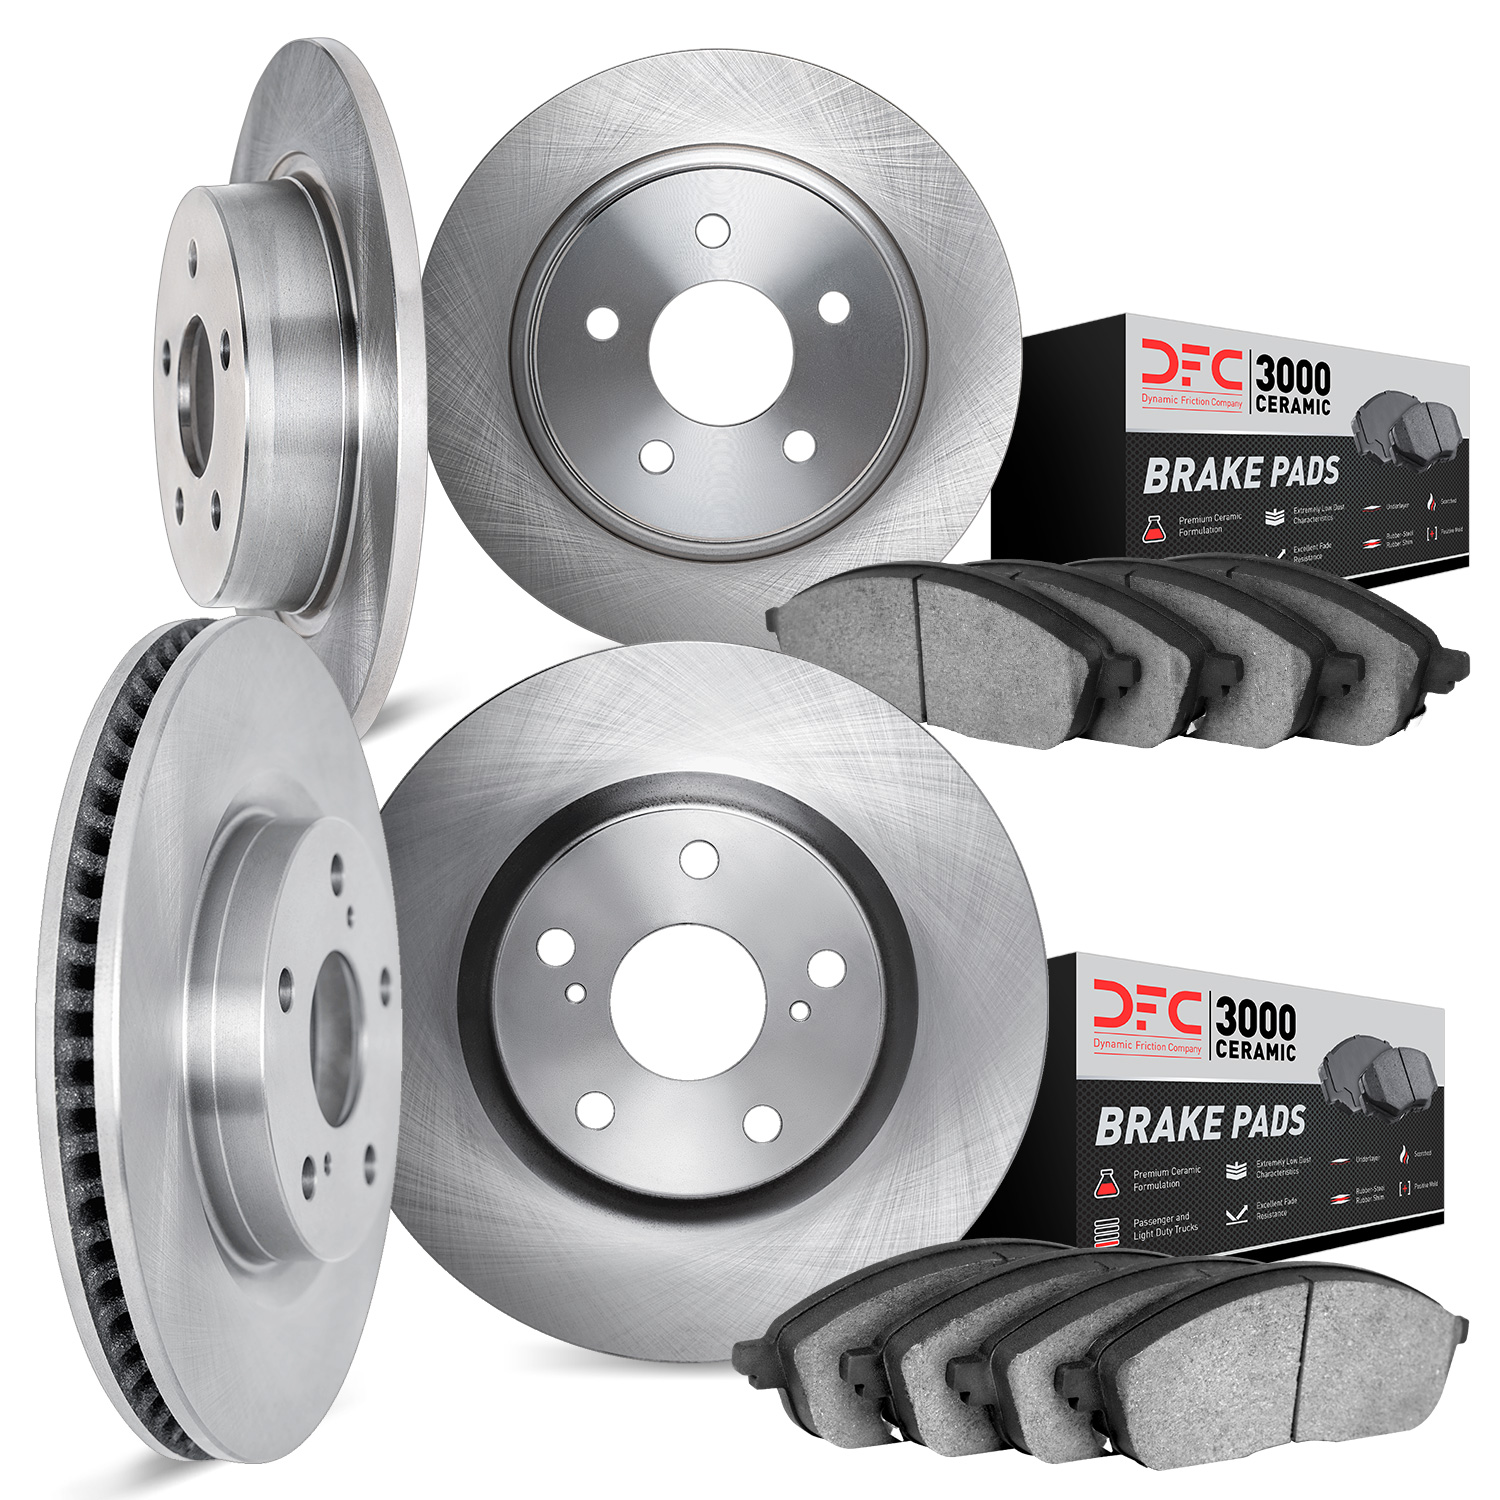 6304-59061 Brake Rotors with 3000-Series Ceramic Brake Pads Kit, 2010-2015 Acura/Honda, Position: Front and Rear